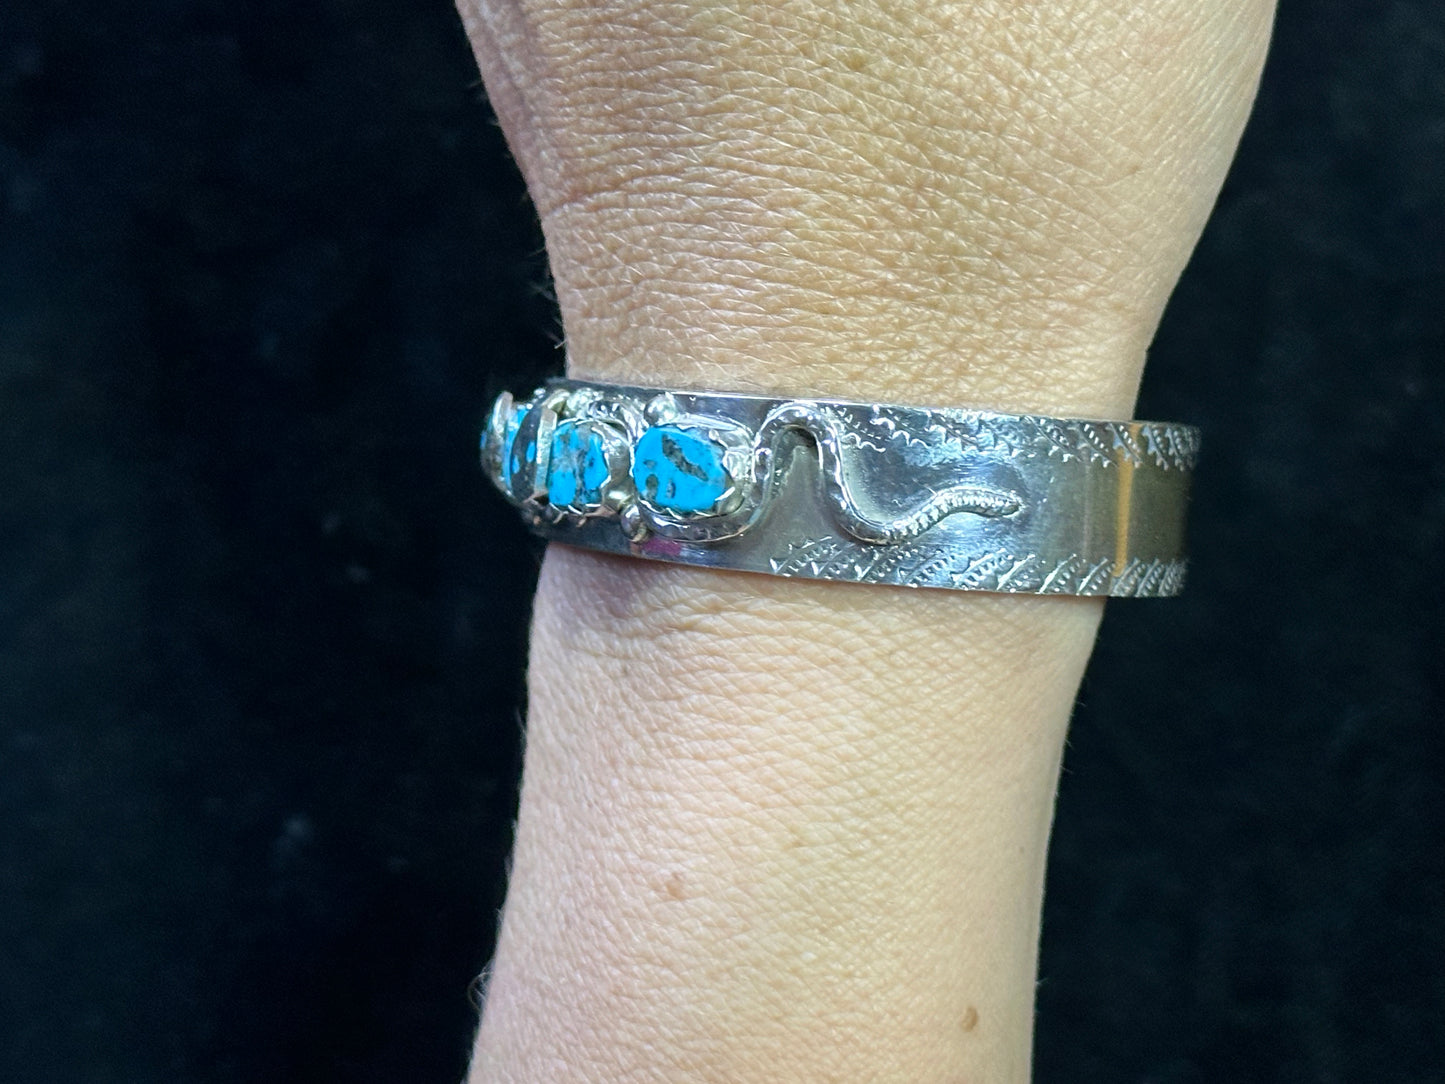 6" Snake Design Cuff with Turquoise Stones by Joy Calavaza, Zuni